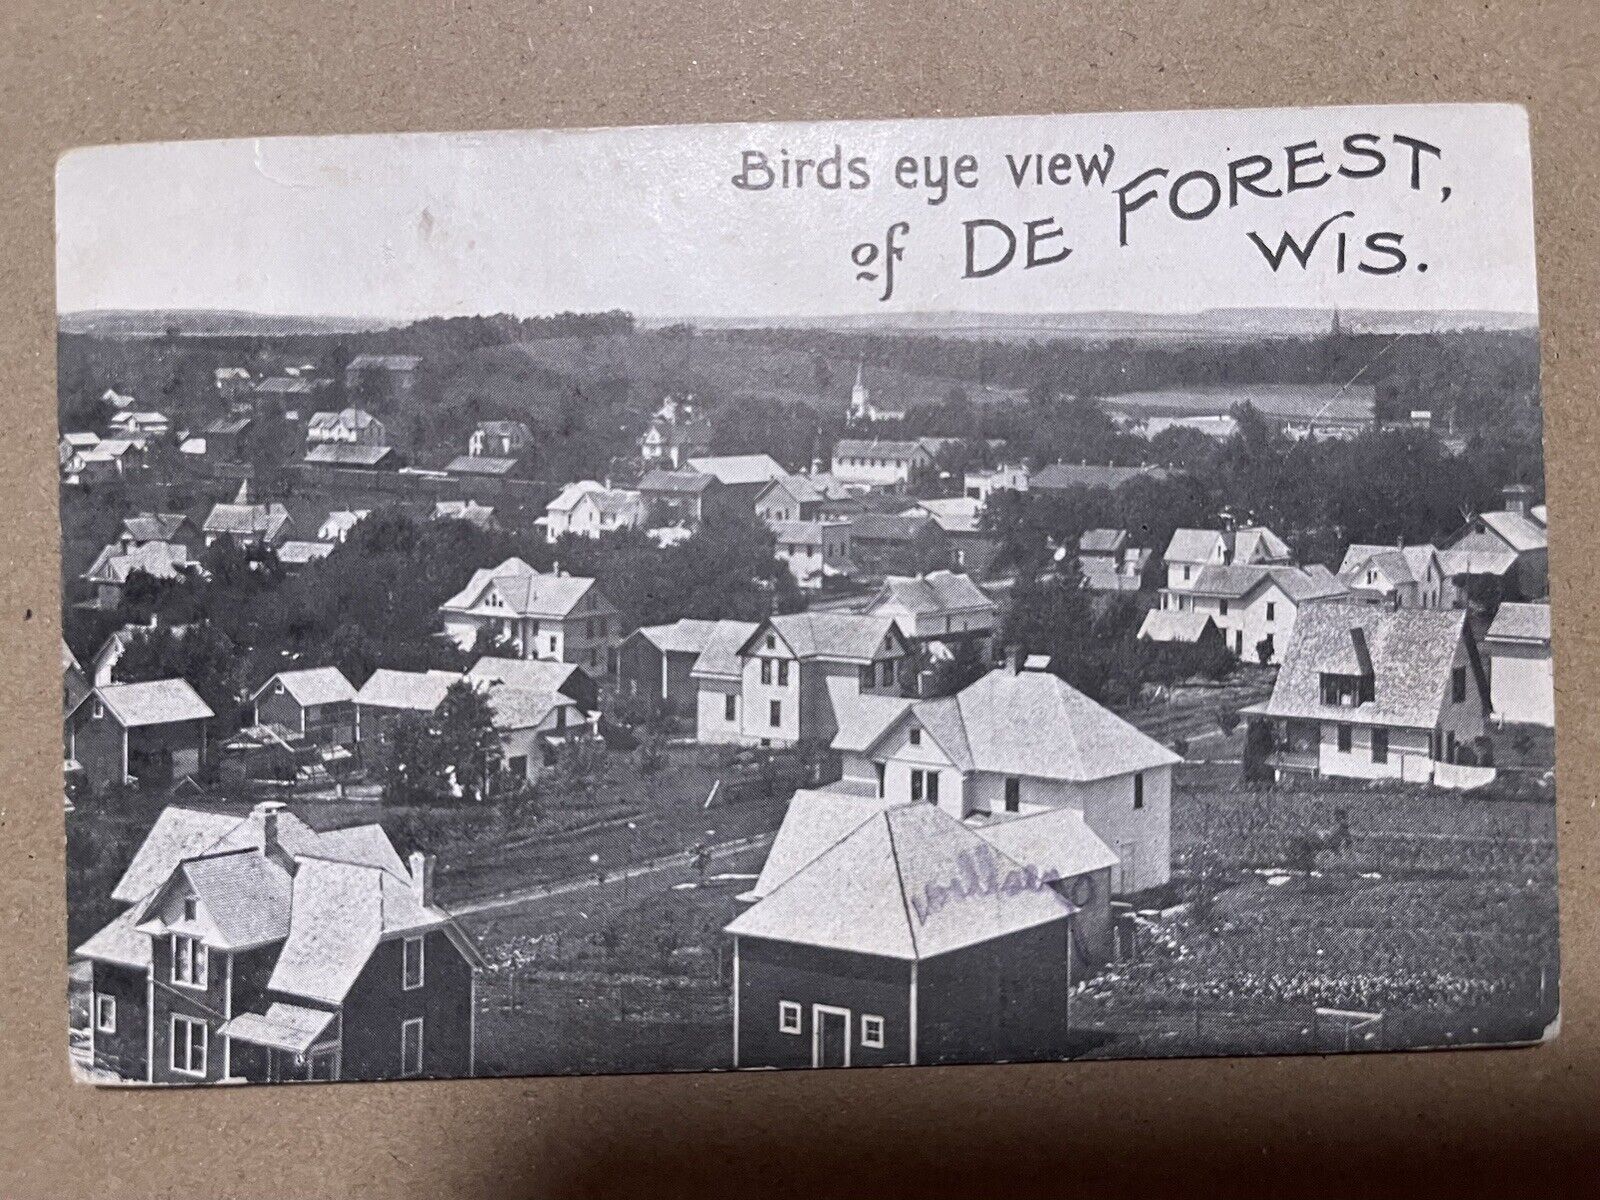 De Forest, Wisconsin Birds Eye View Postcard 1913